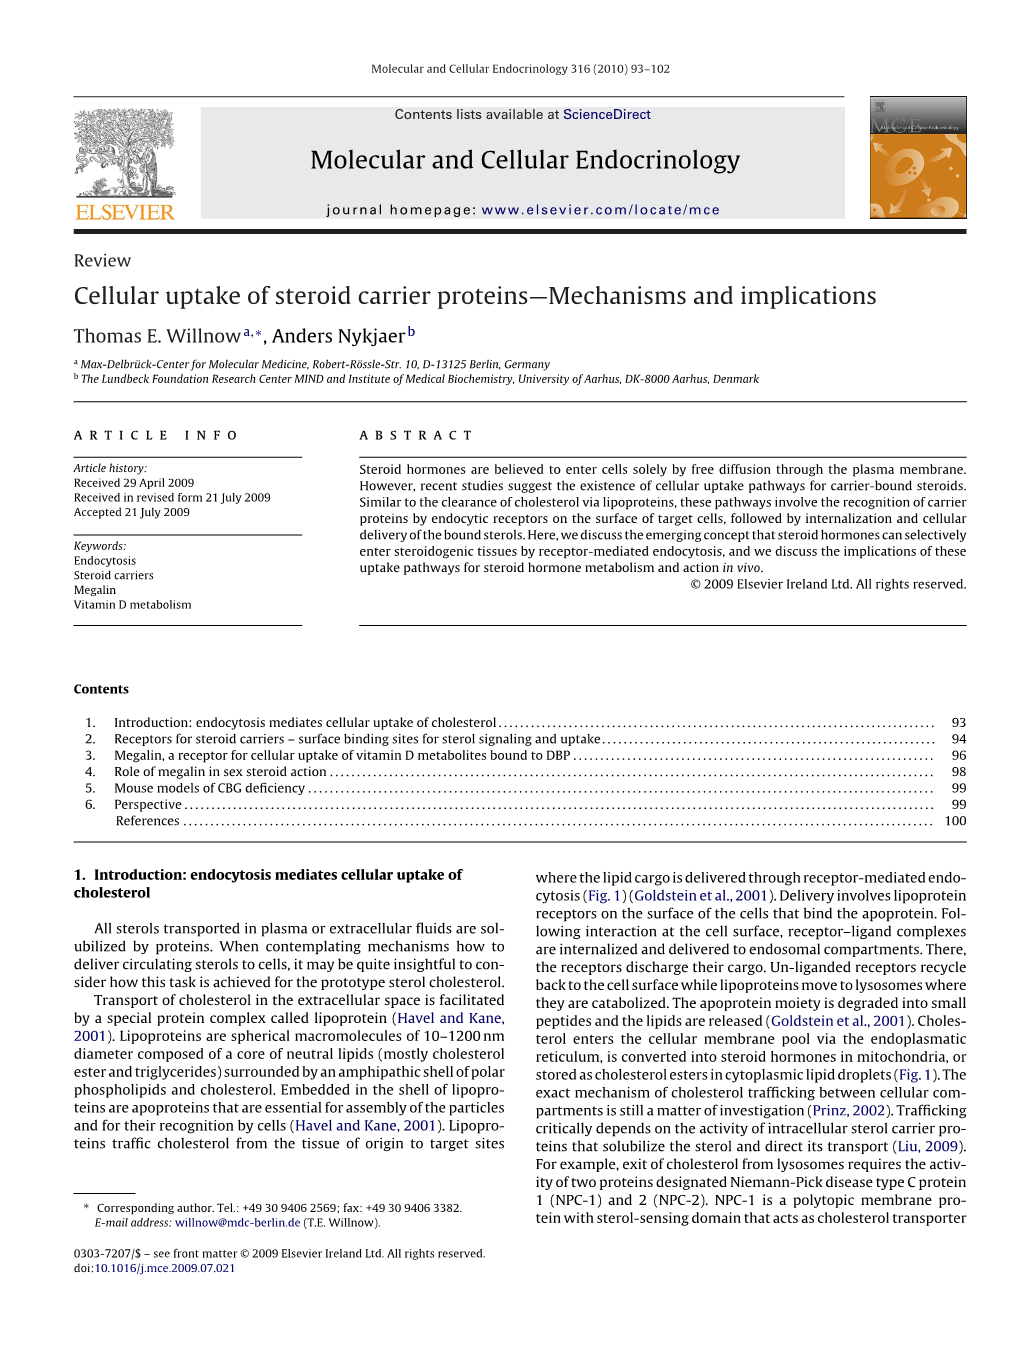 Molecular and Cellular Endocrinology Cellular Uptake of Steroid Carrier